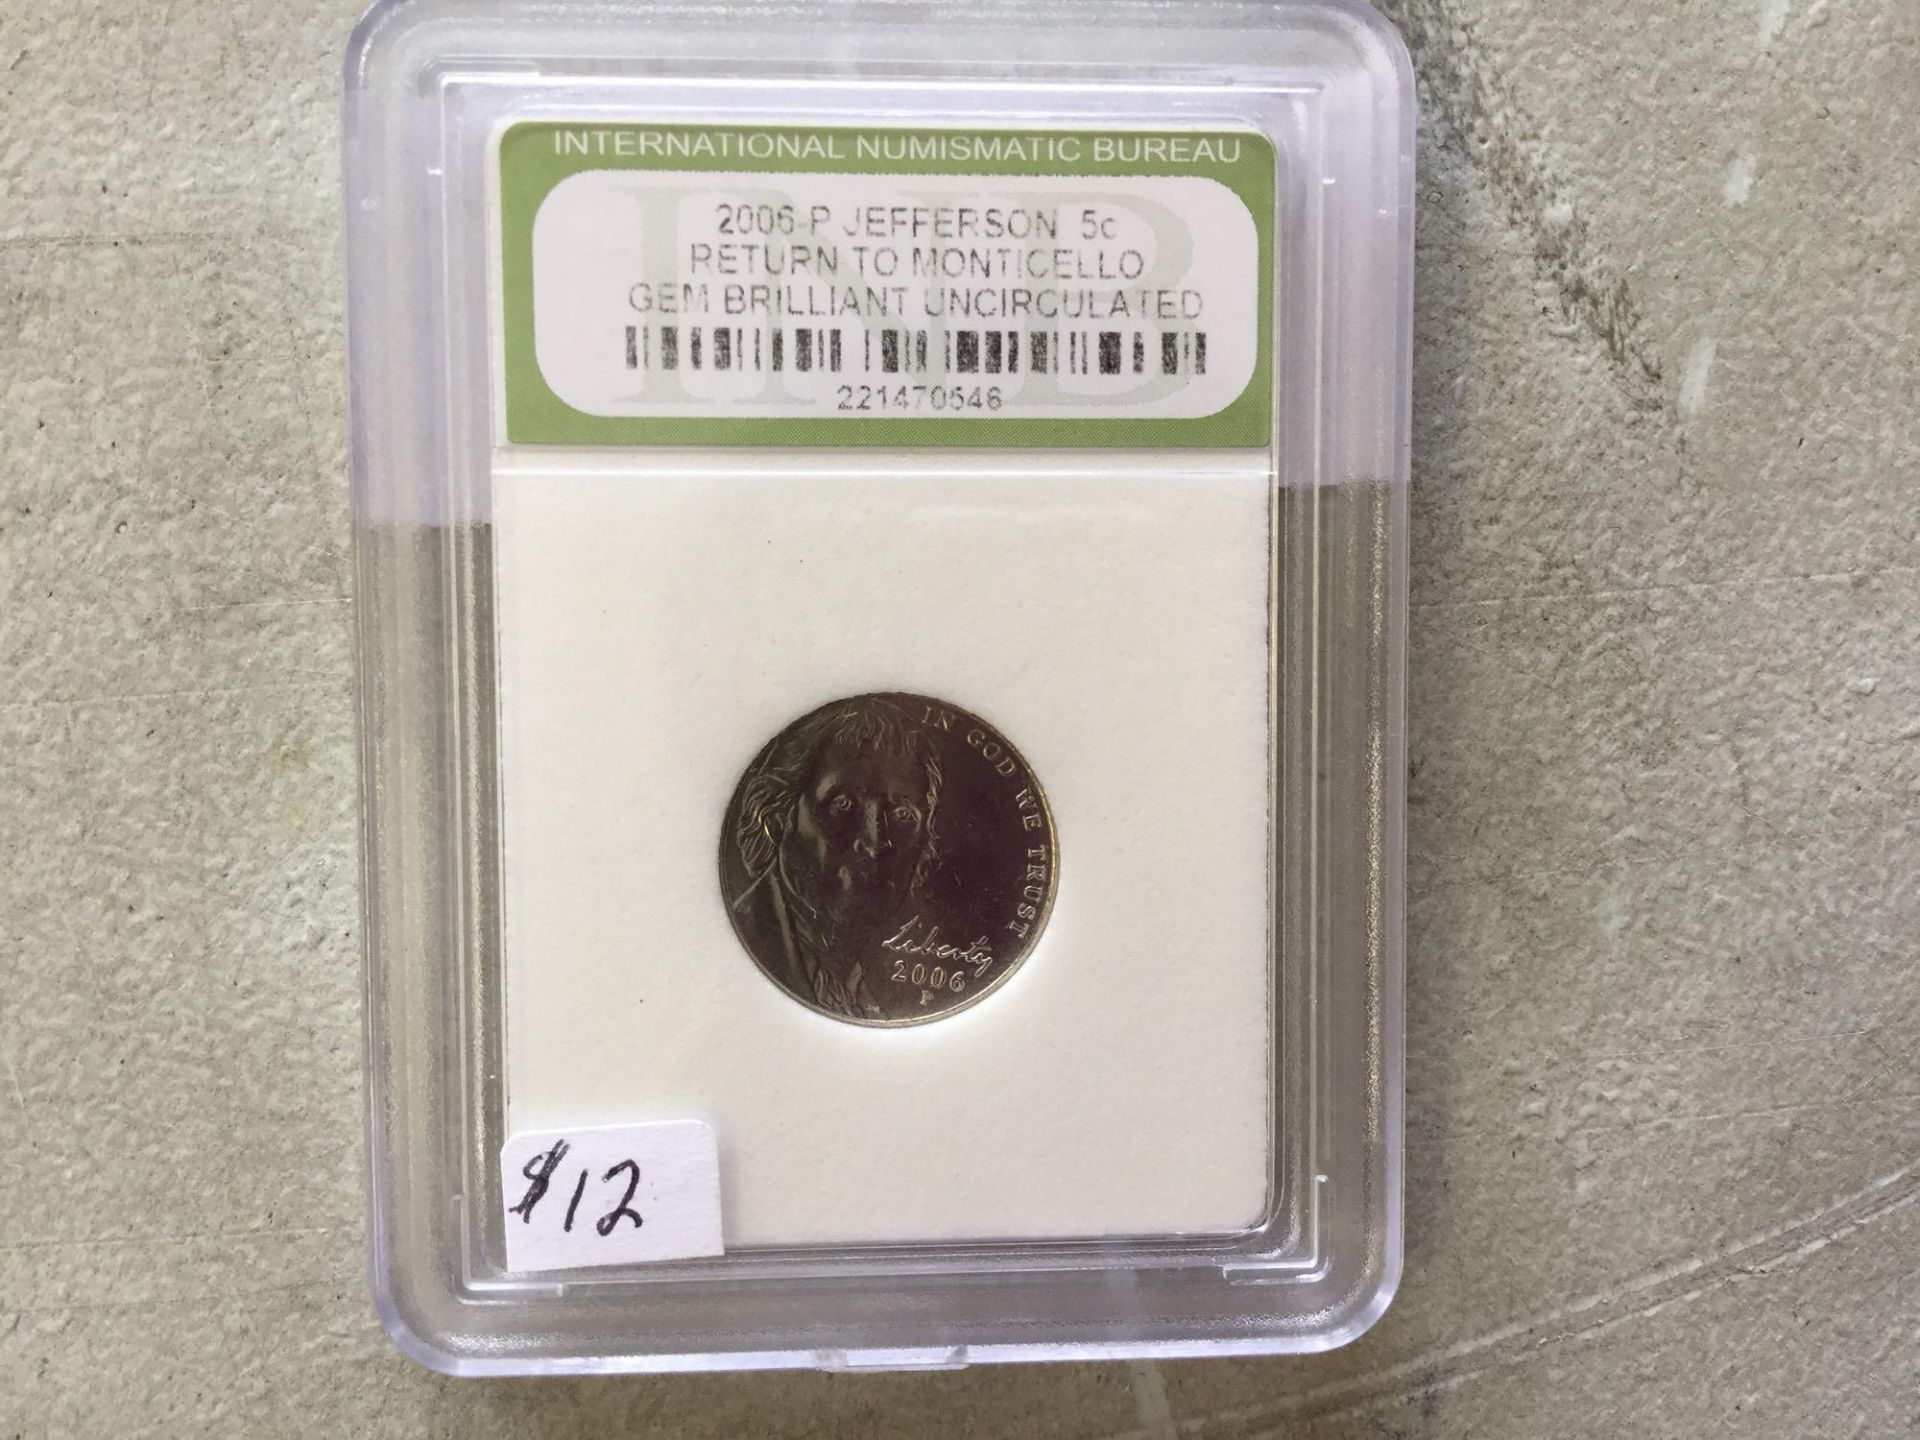 2006-P US Jefferson 5 cent Coin Return to Monticello - Brilliant uncirculated